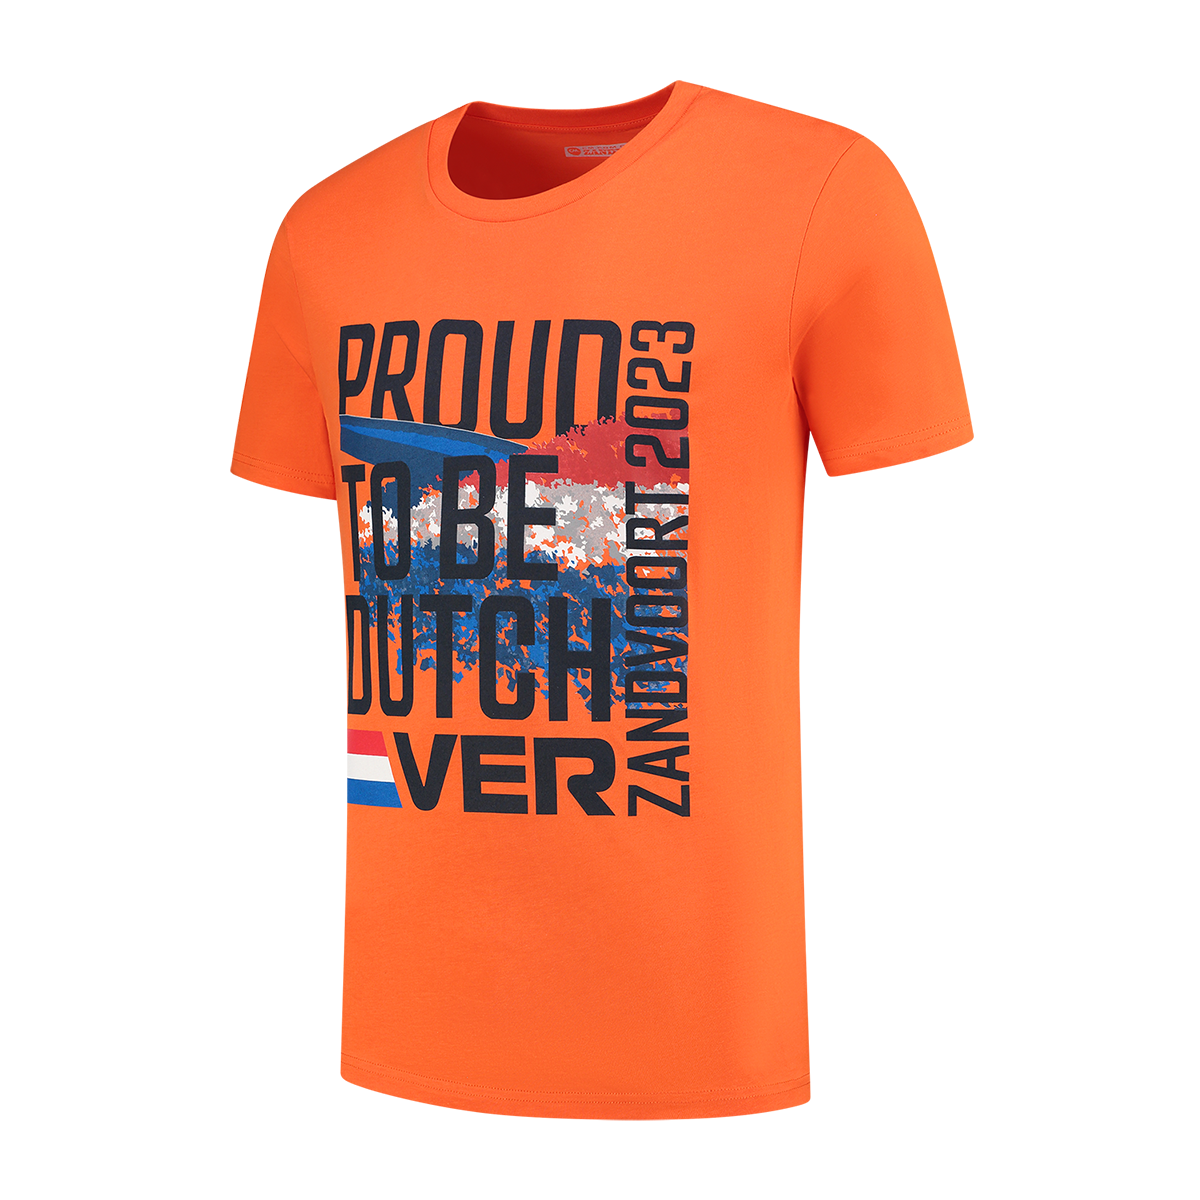 Proud to be Dutch - T-shirt Oranje - XL - Max Verstappen